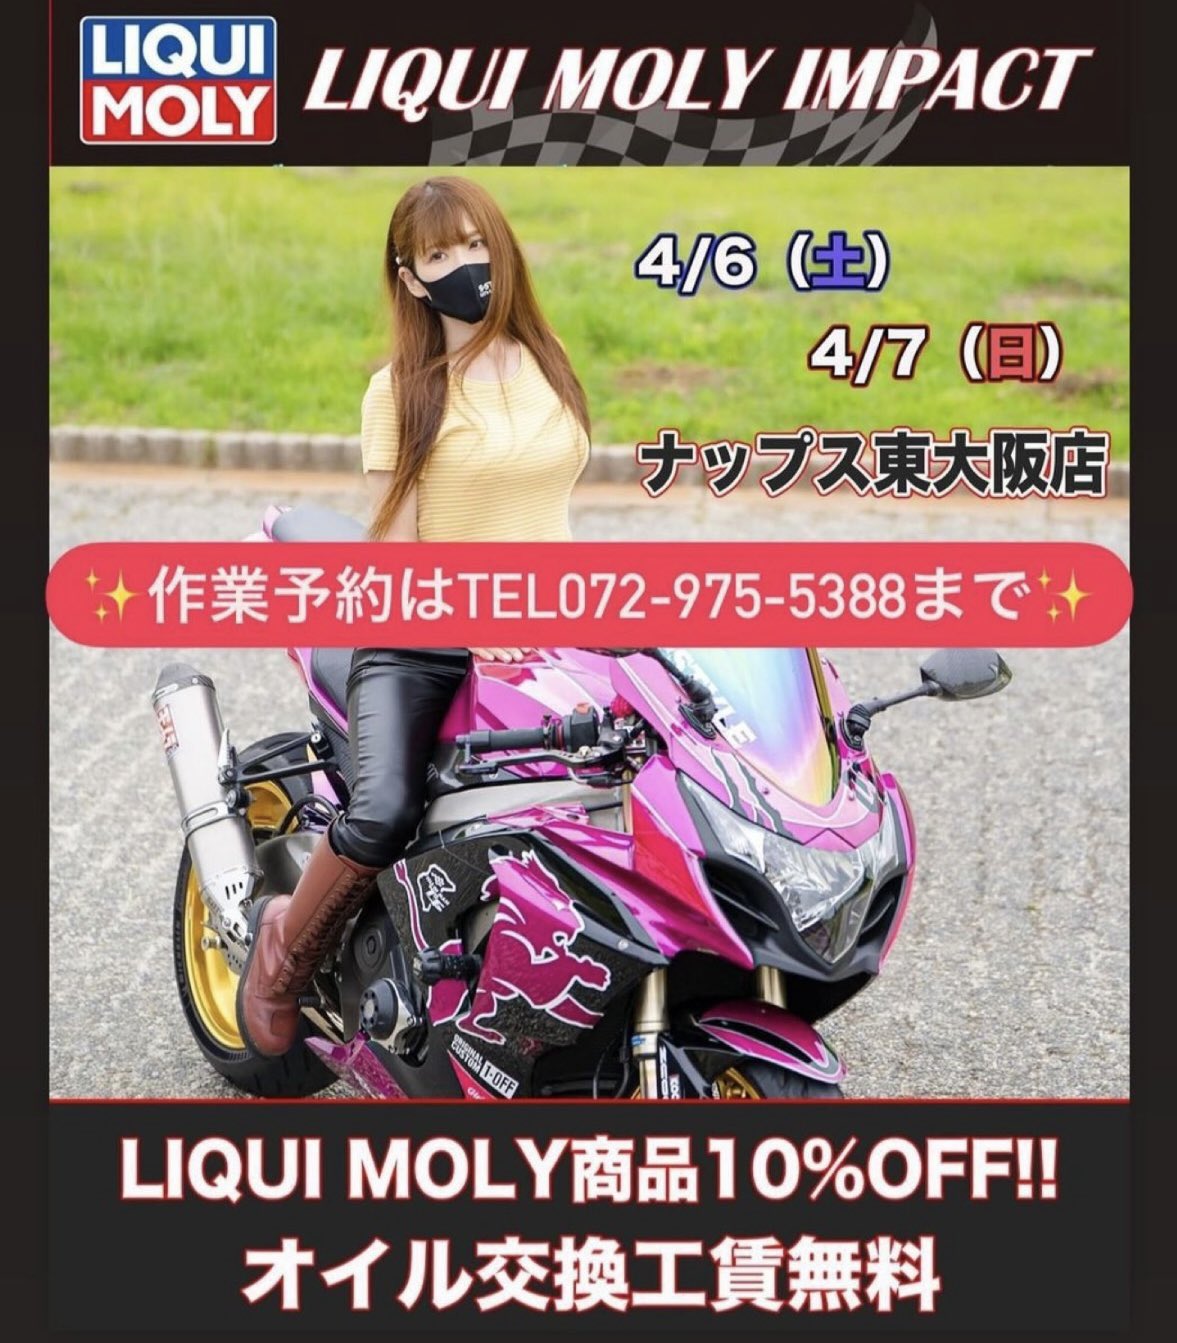 LIQUI MOLY 二輪 日本代理店 谷尾商会 (@LIQUIMOLY_TANIO) / X